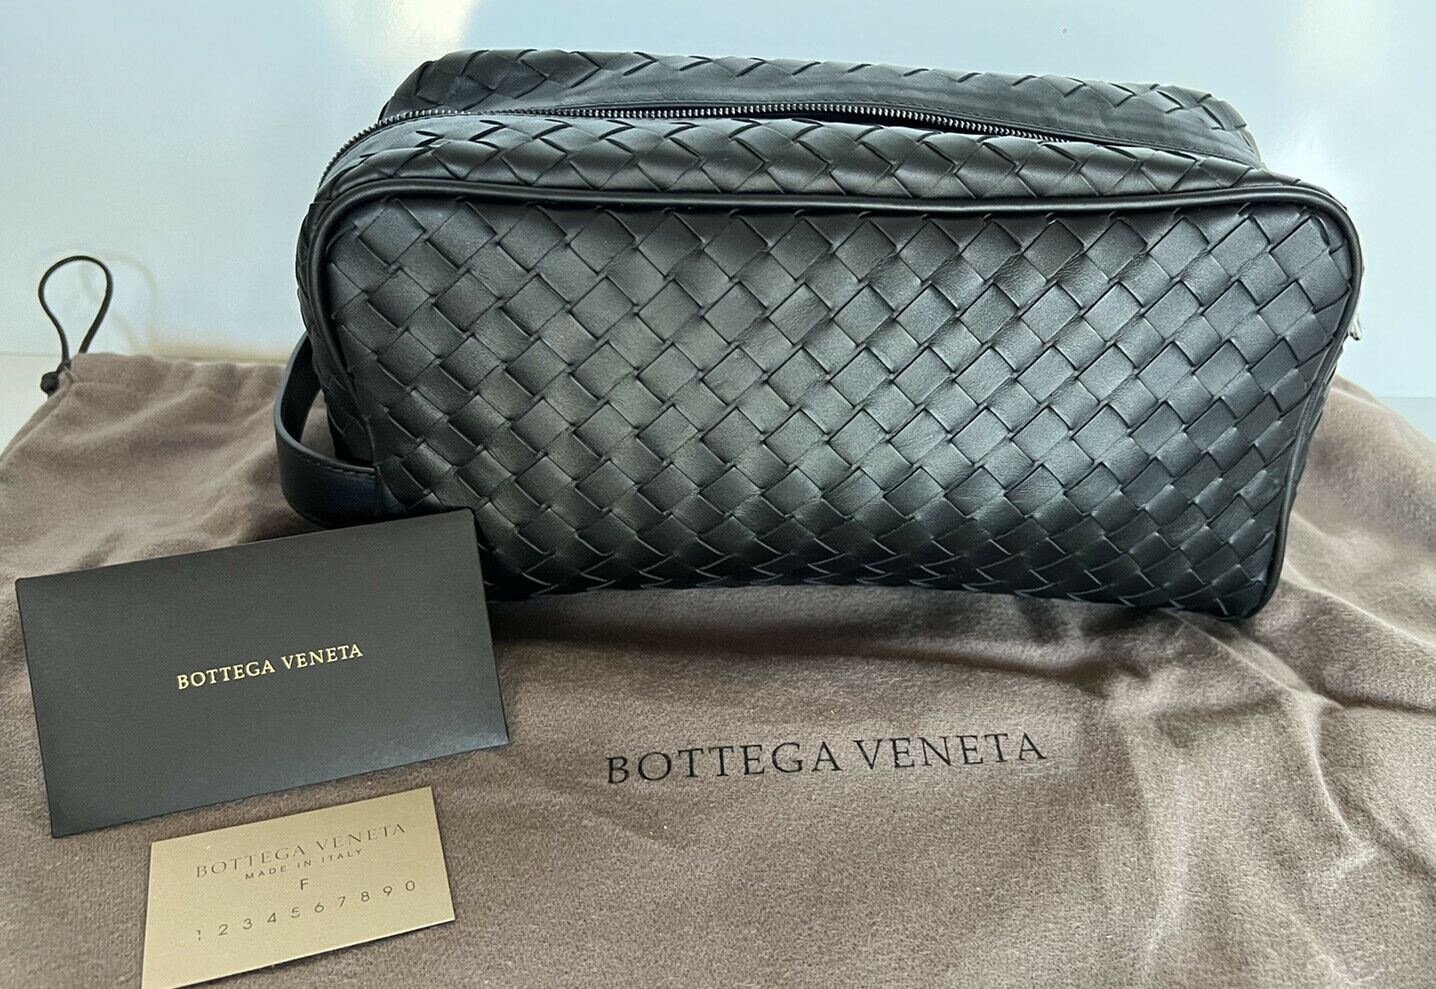 NWT 830 $ Bottega Veneta Black Intrecciato Kulturbeutel 244706 Italien 